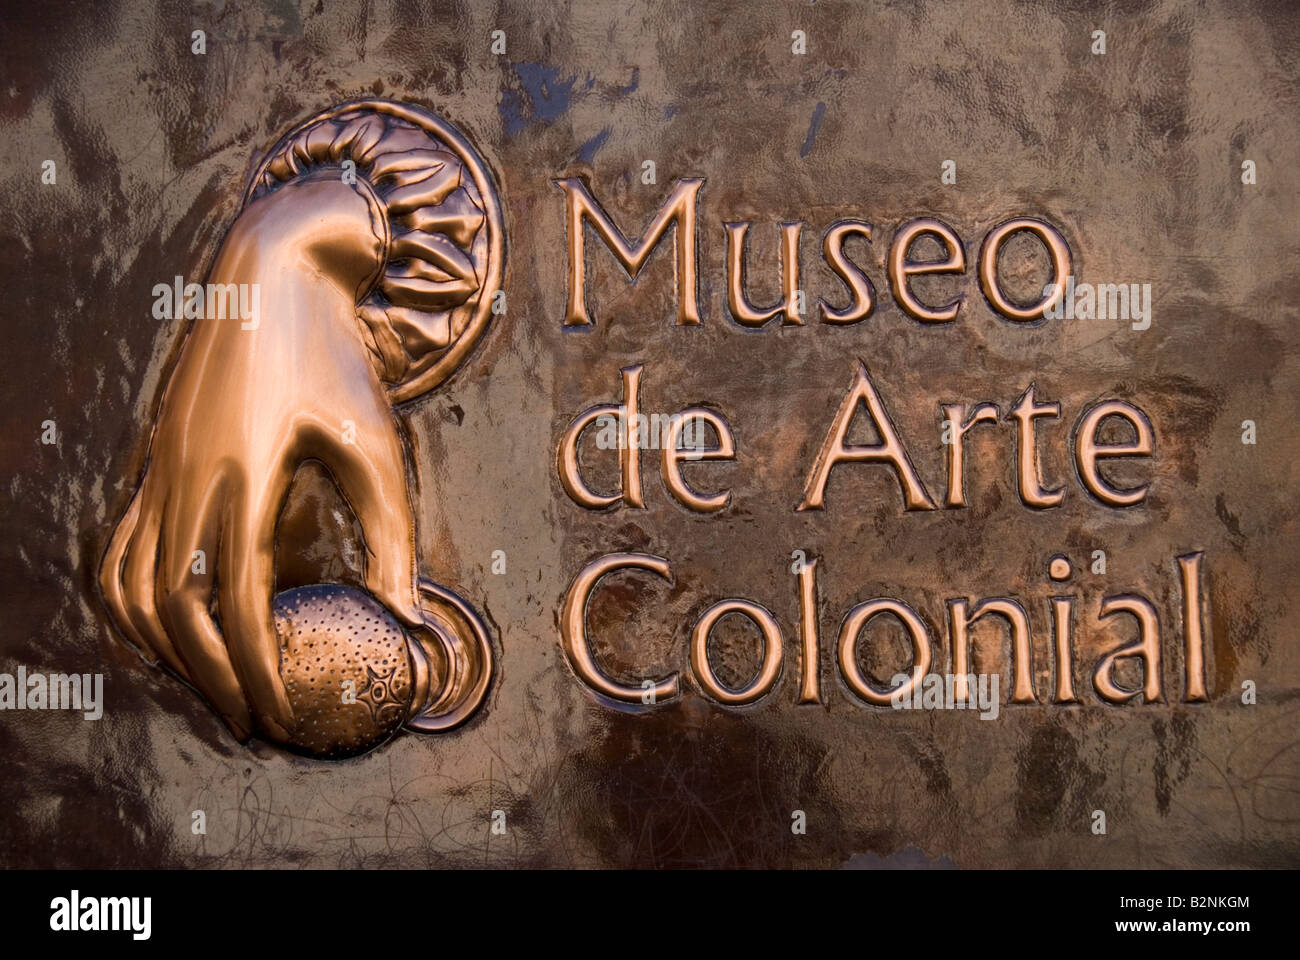 Messingplakette am Eingang zum Museum für koloniale Kunst Museo de Arte Colonial, Havanna Kuba Stockfoto